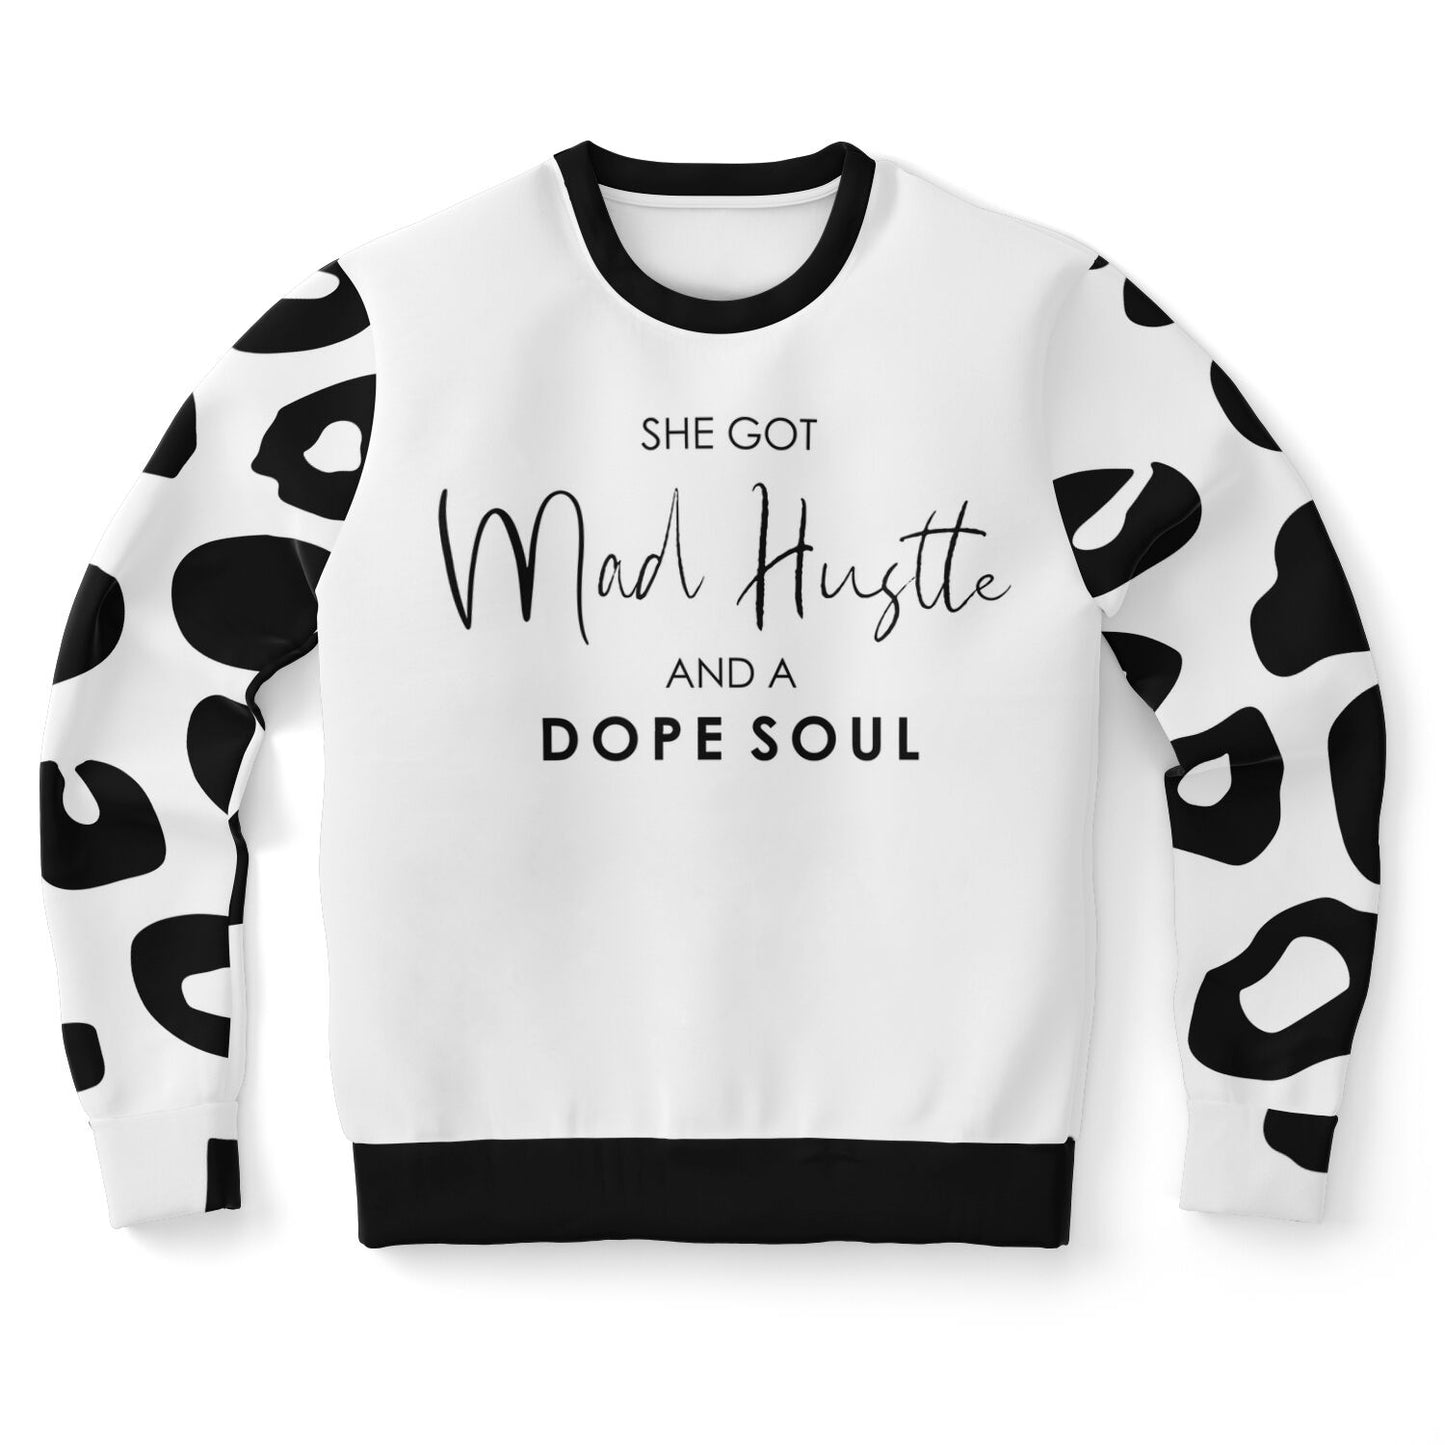 She Got Mad Hustle & A Dope Soul Fashion Sweatshirt - AOP